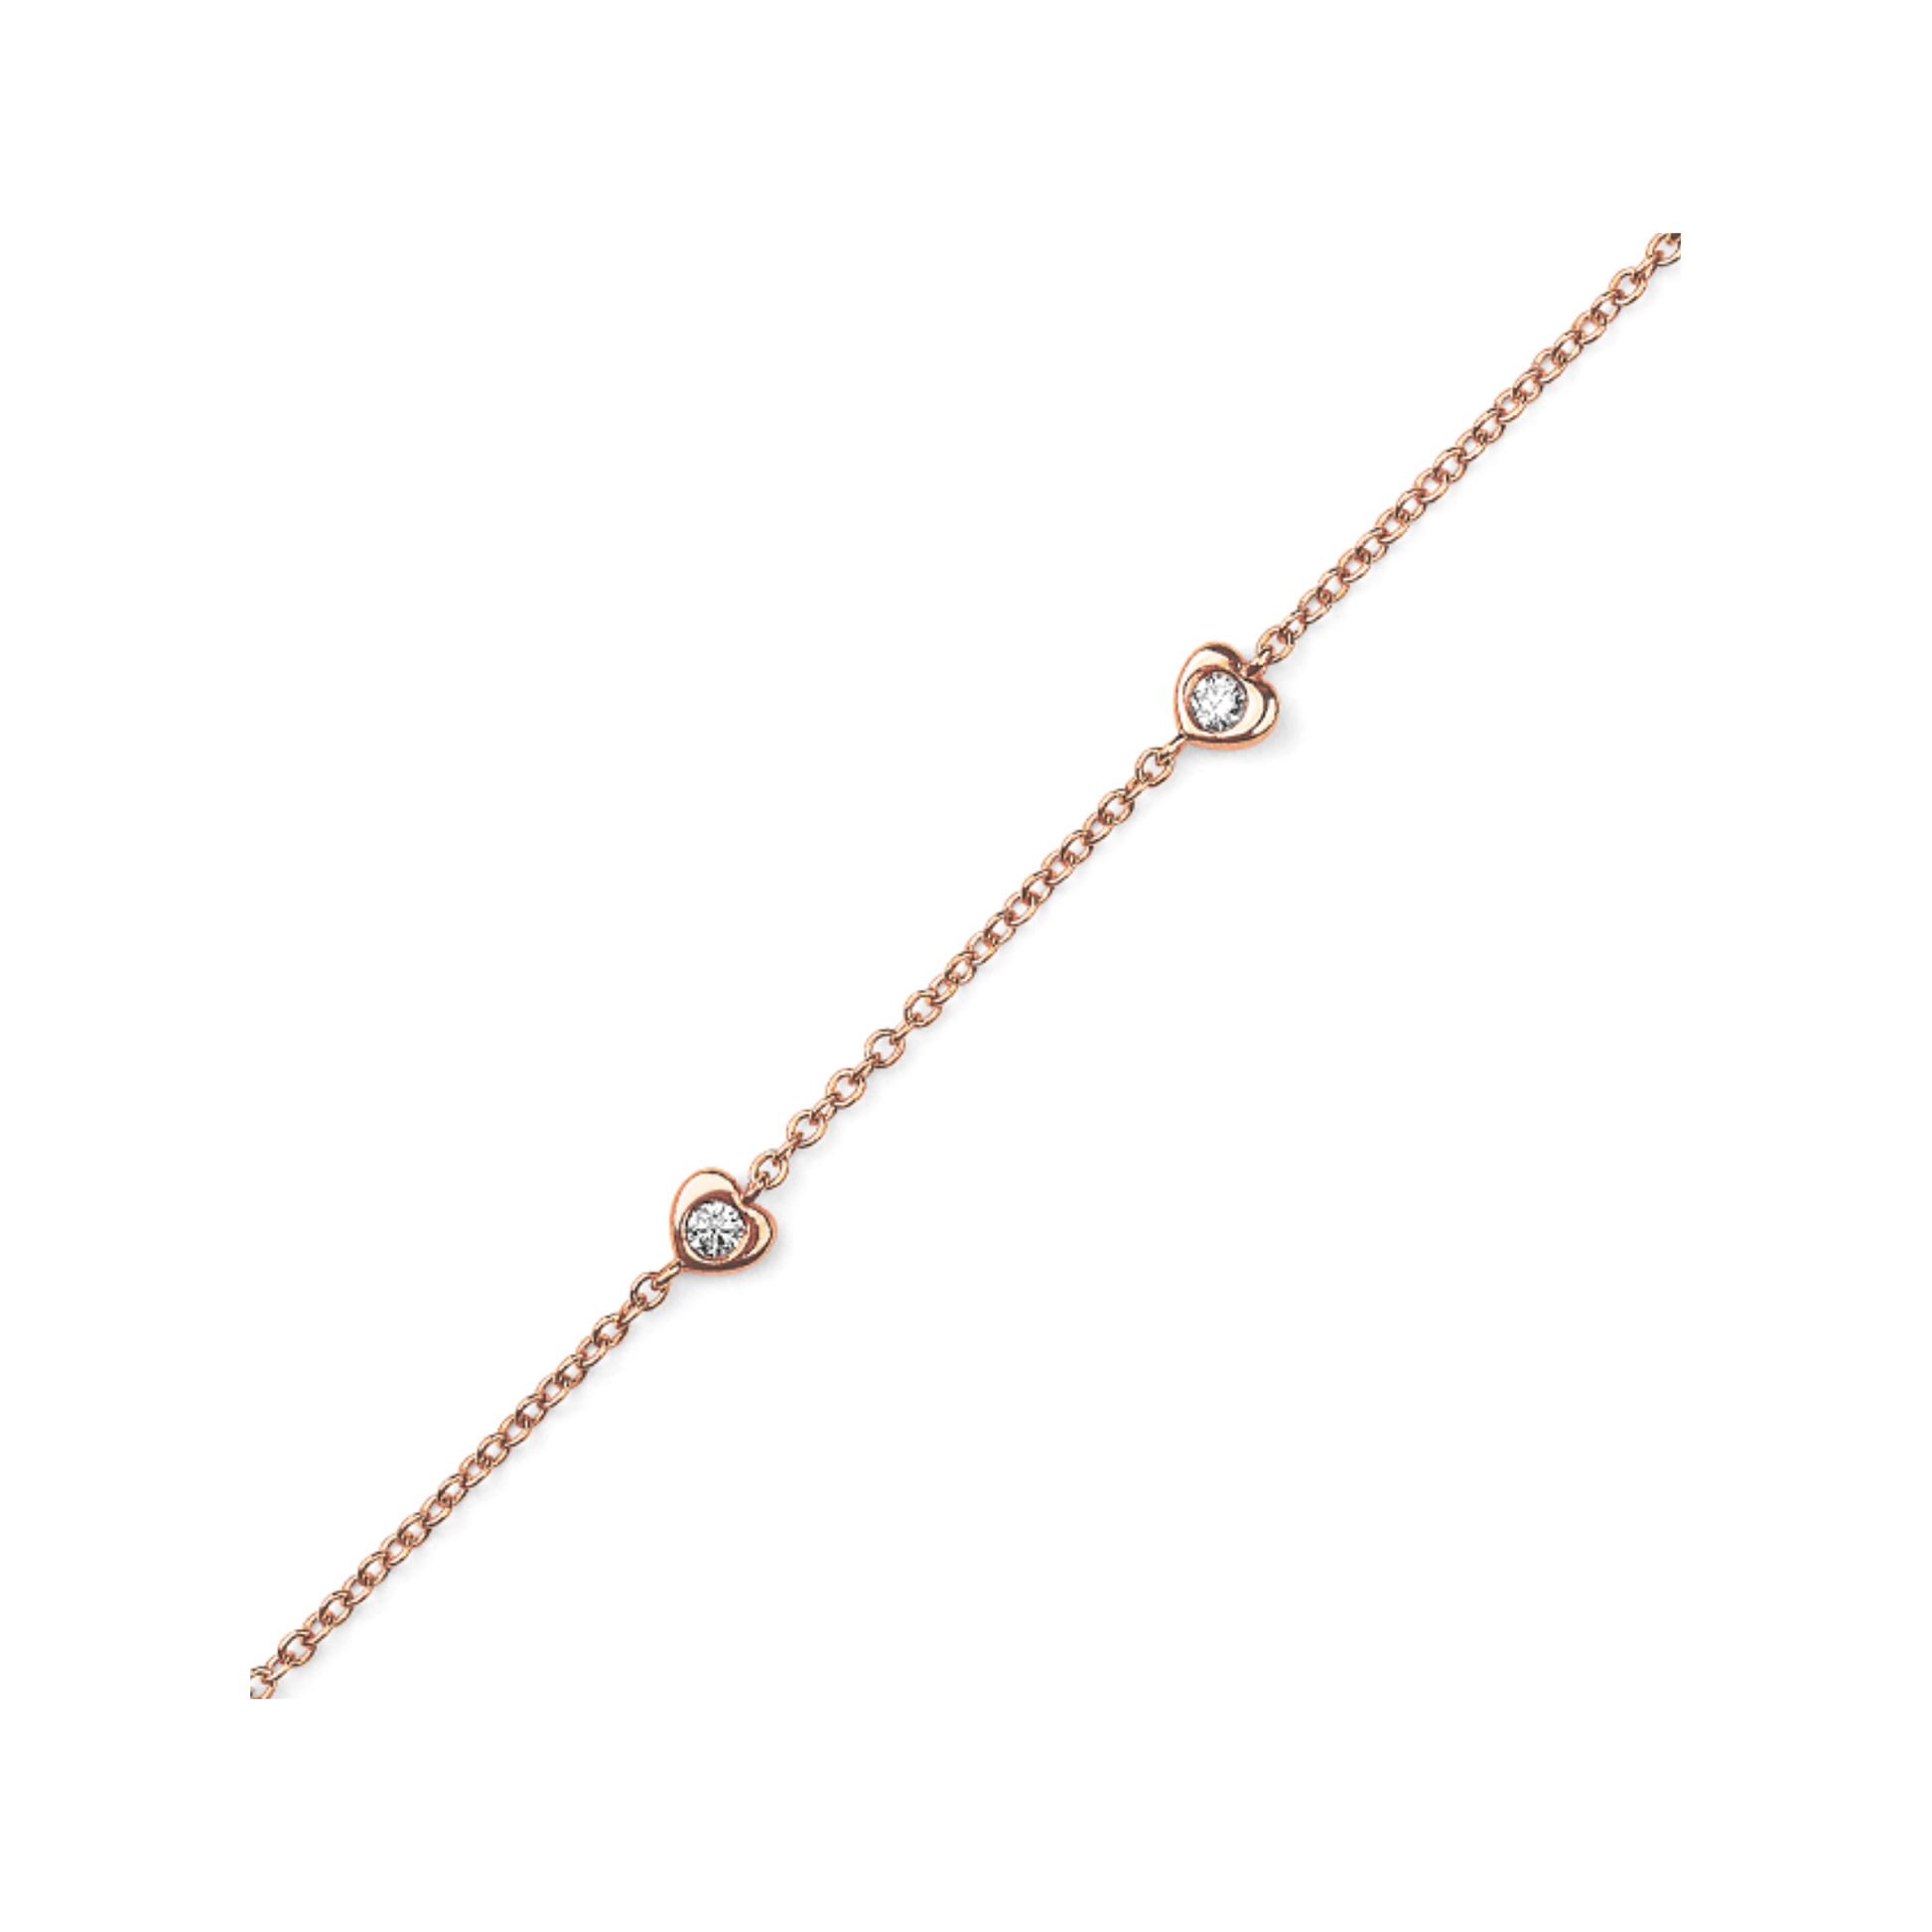 Oliver Heemeyer Mini Hearts diamond bracelet in 18k rose gold.